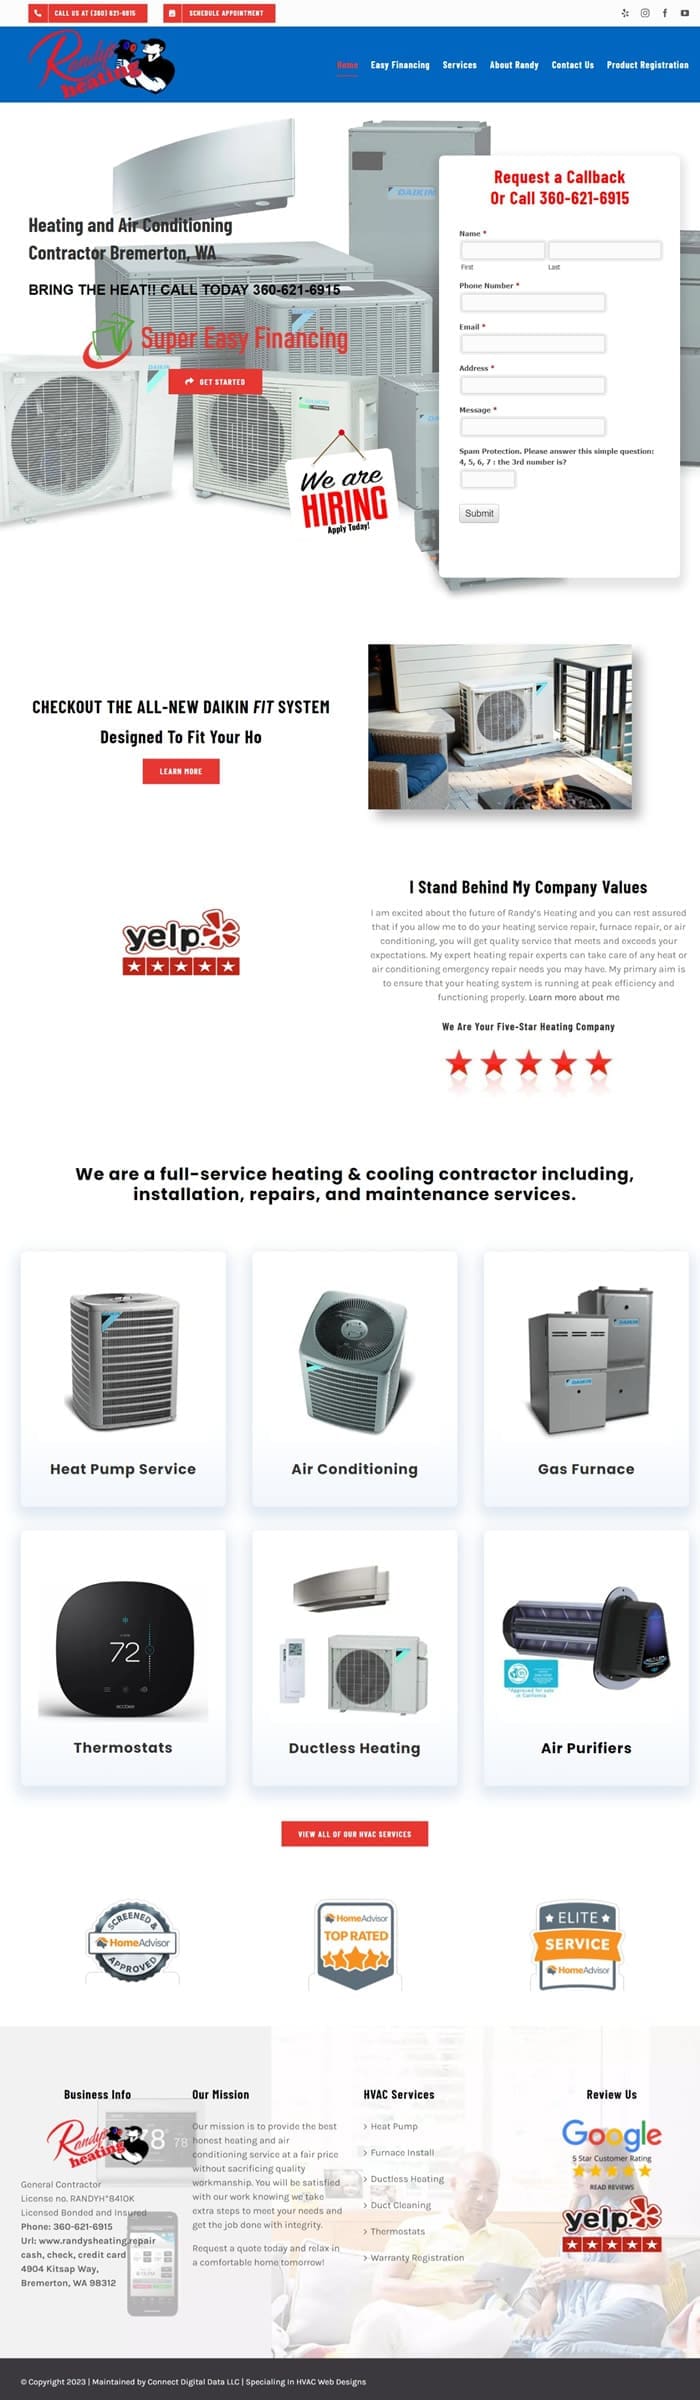 New designer website Randy's Heating